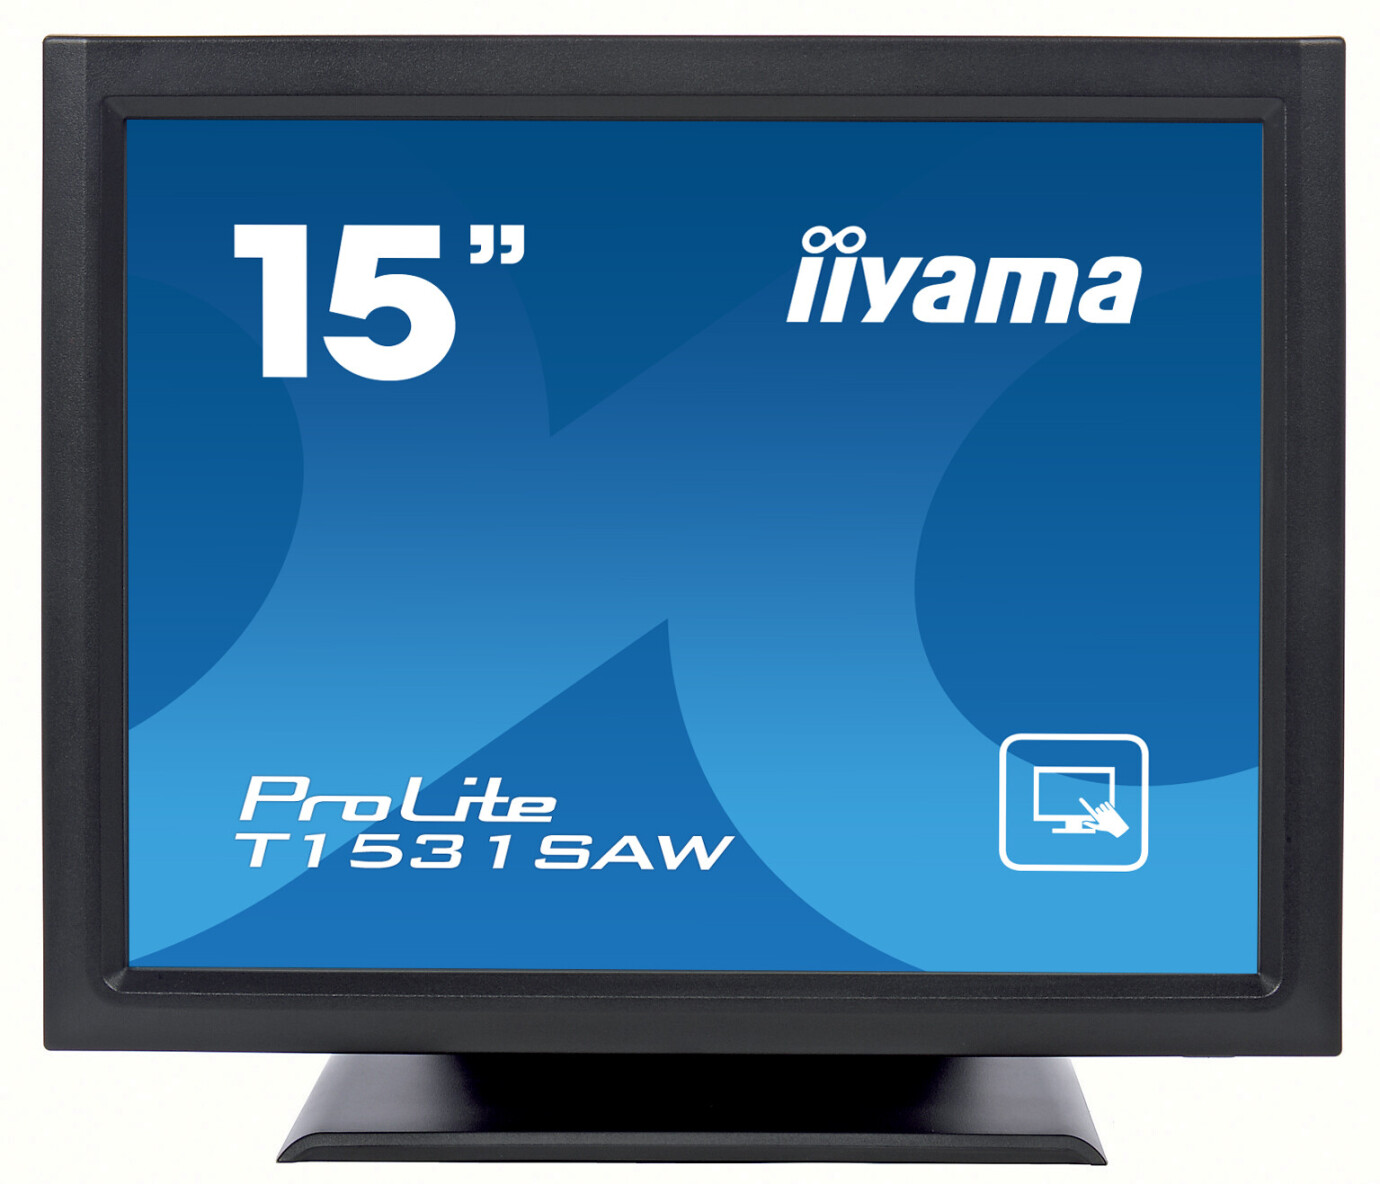 iiyama Prolite T1531SAW-B5 15" Touchmonitor mit 8ms und XGA Auflösung